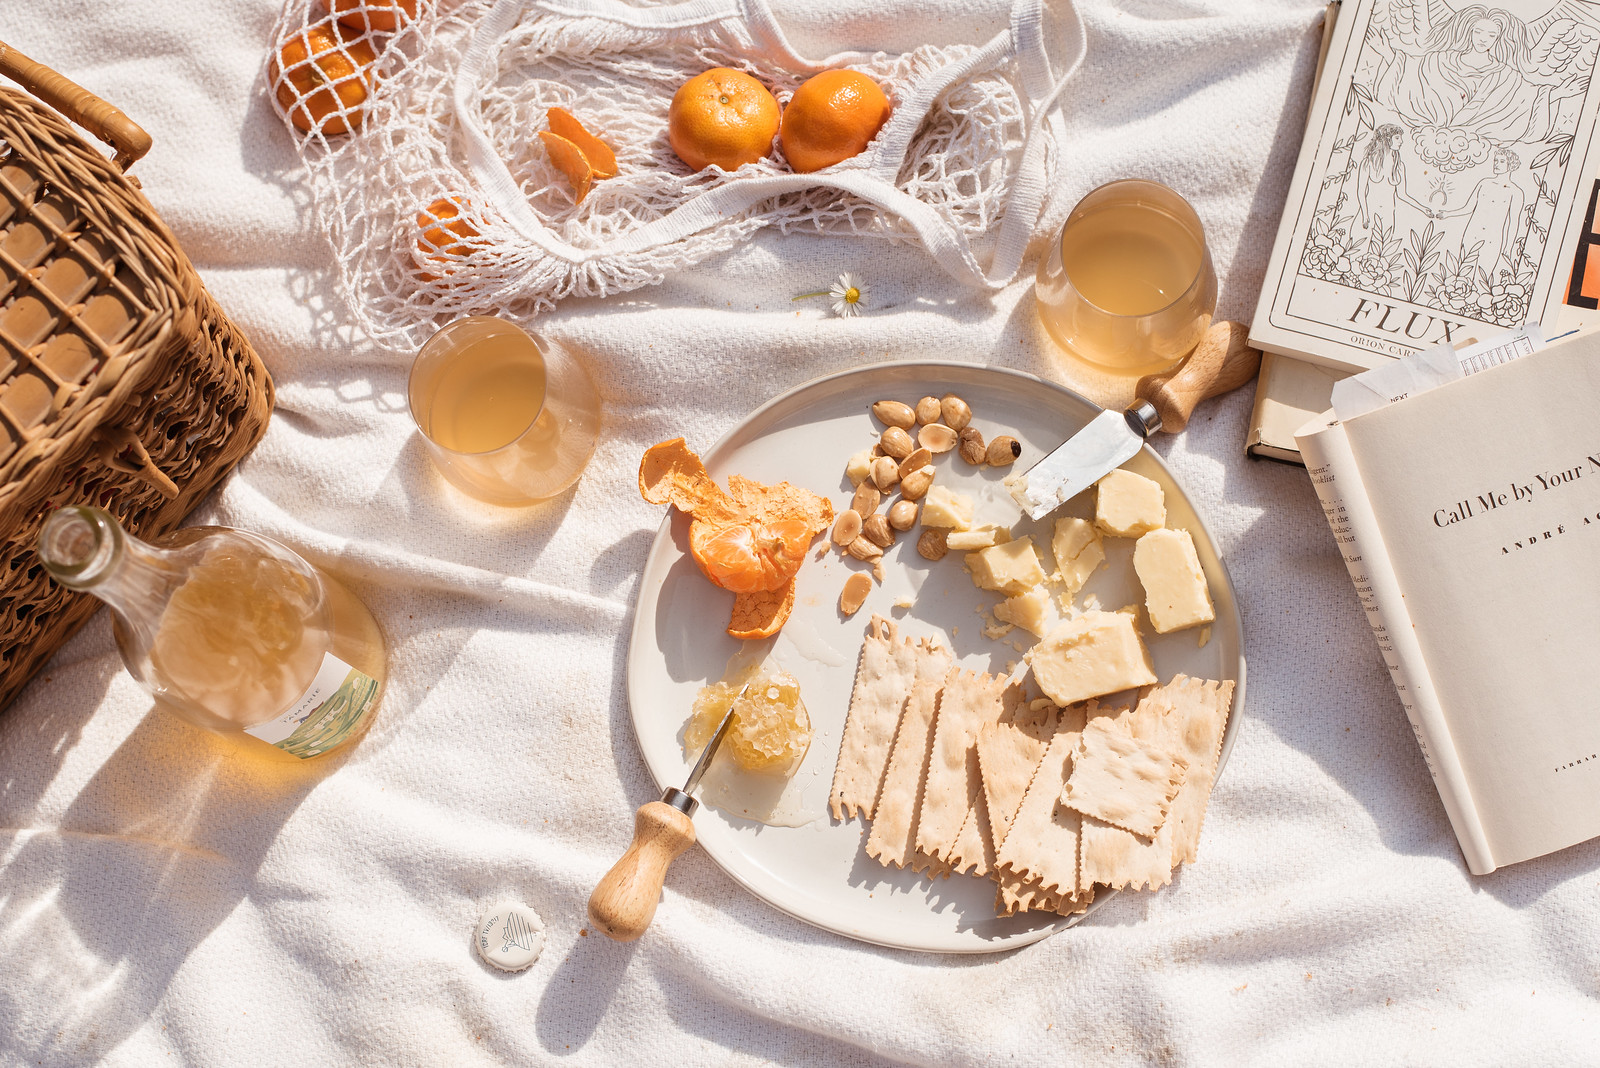 orange wine and cheese plate picnic on juliettelaura.com